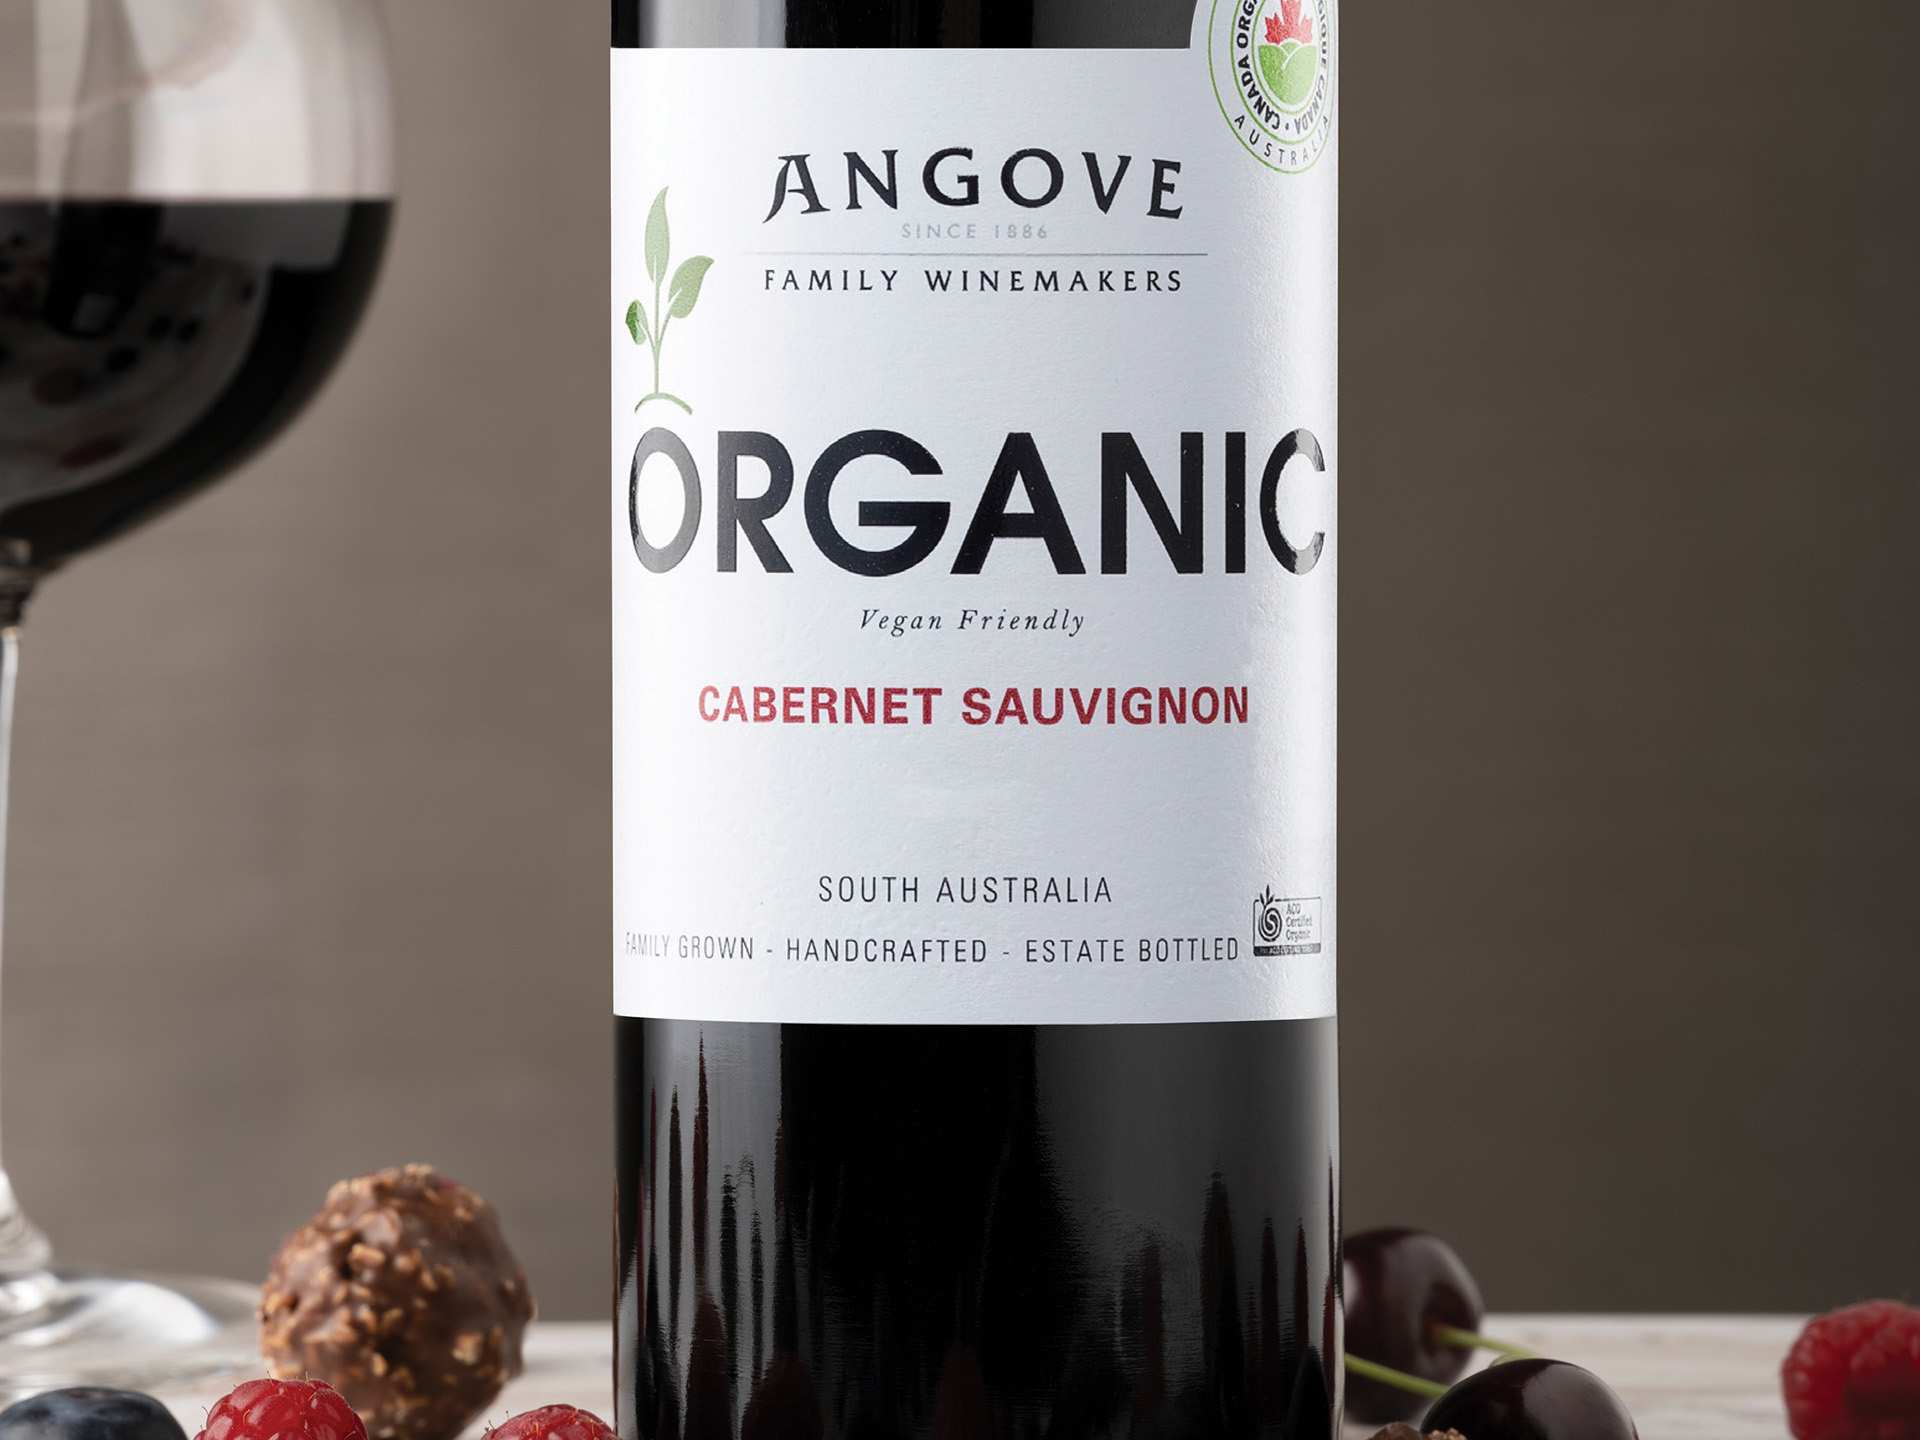 Angove wine | A bottle of Angove Organic wine